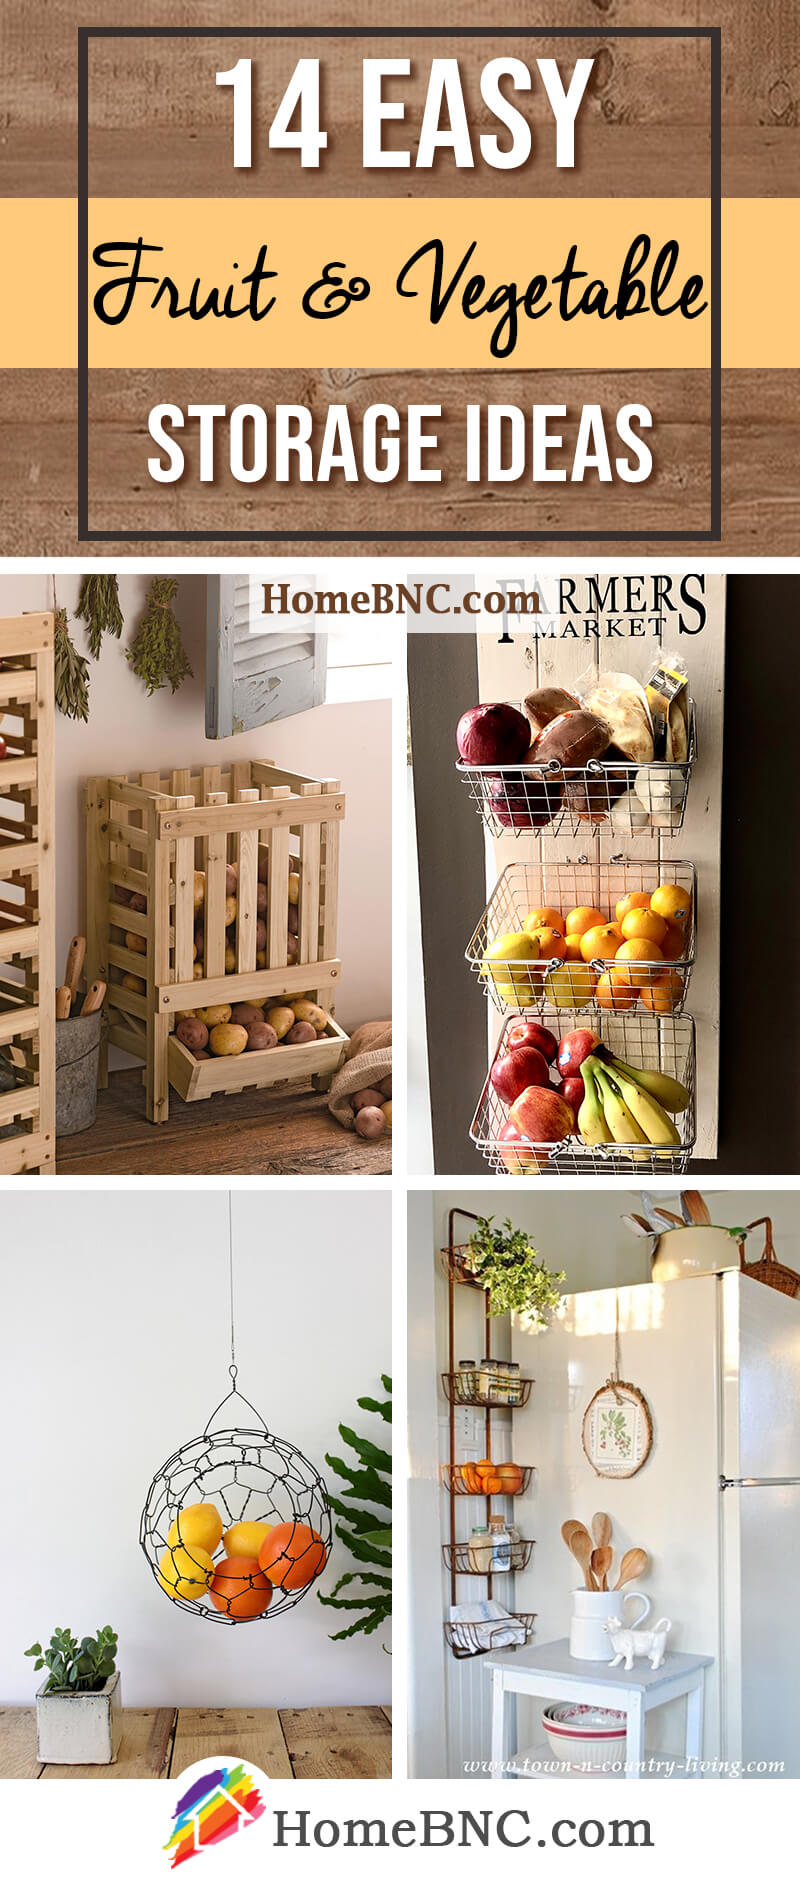 Fruit And Vegetable Storage Ideas Pinterest Share Homebnc V5 